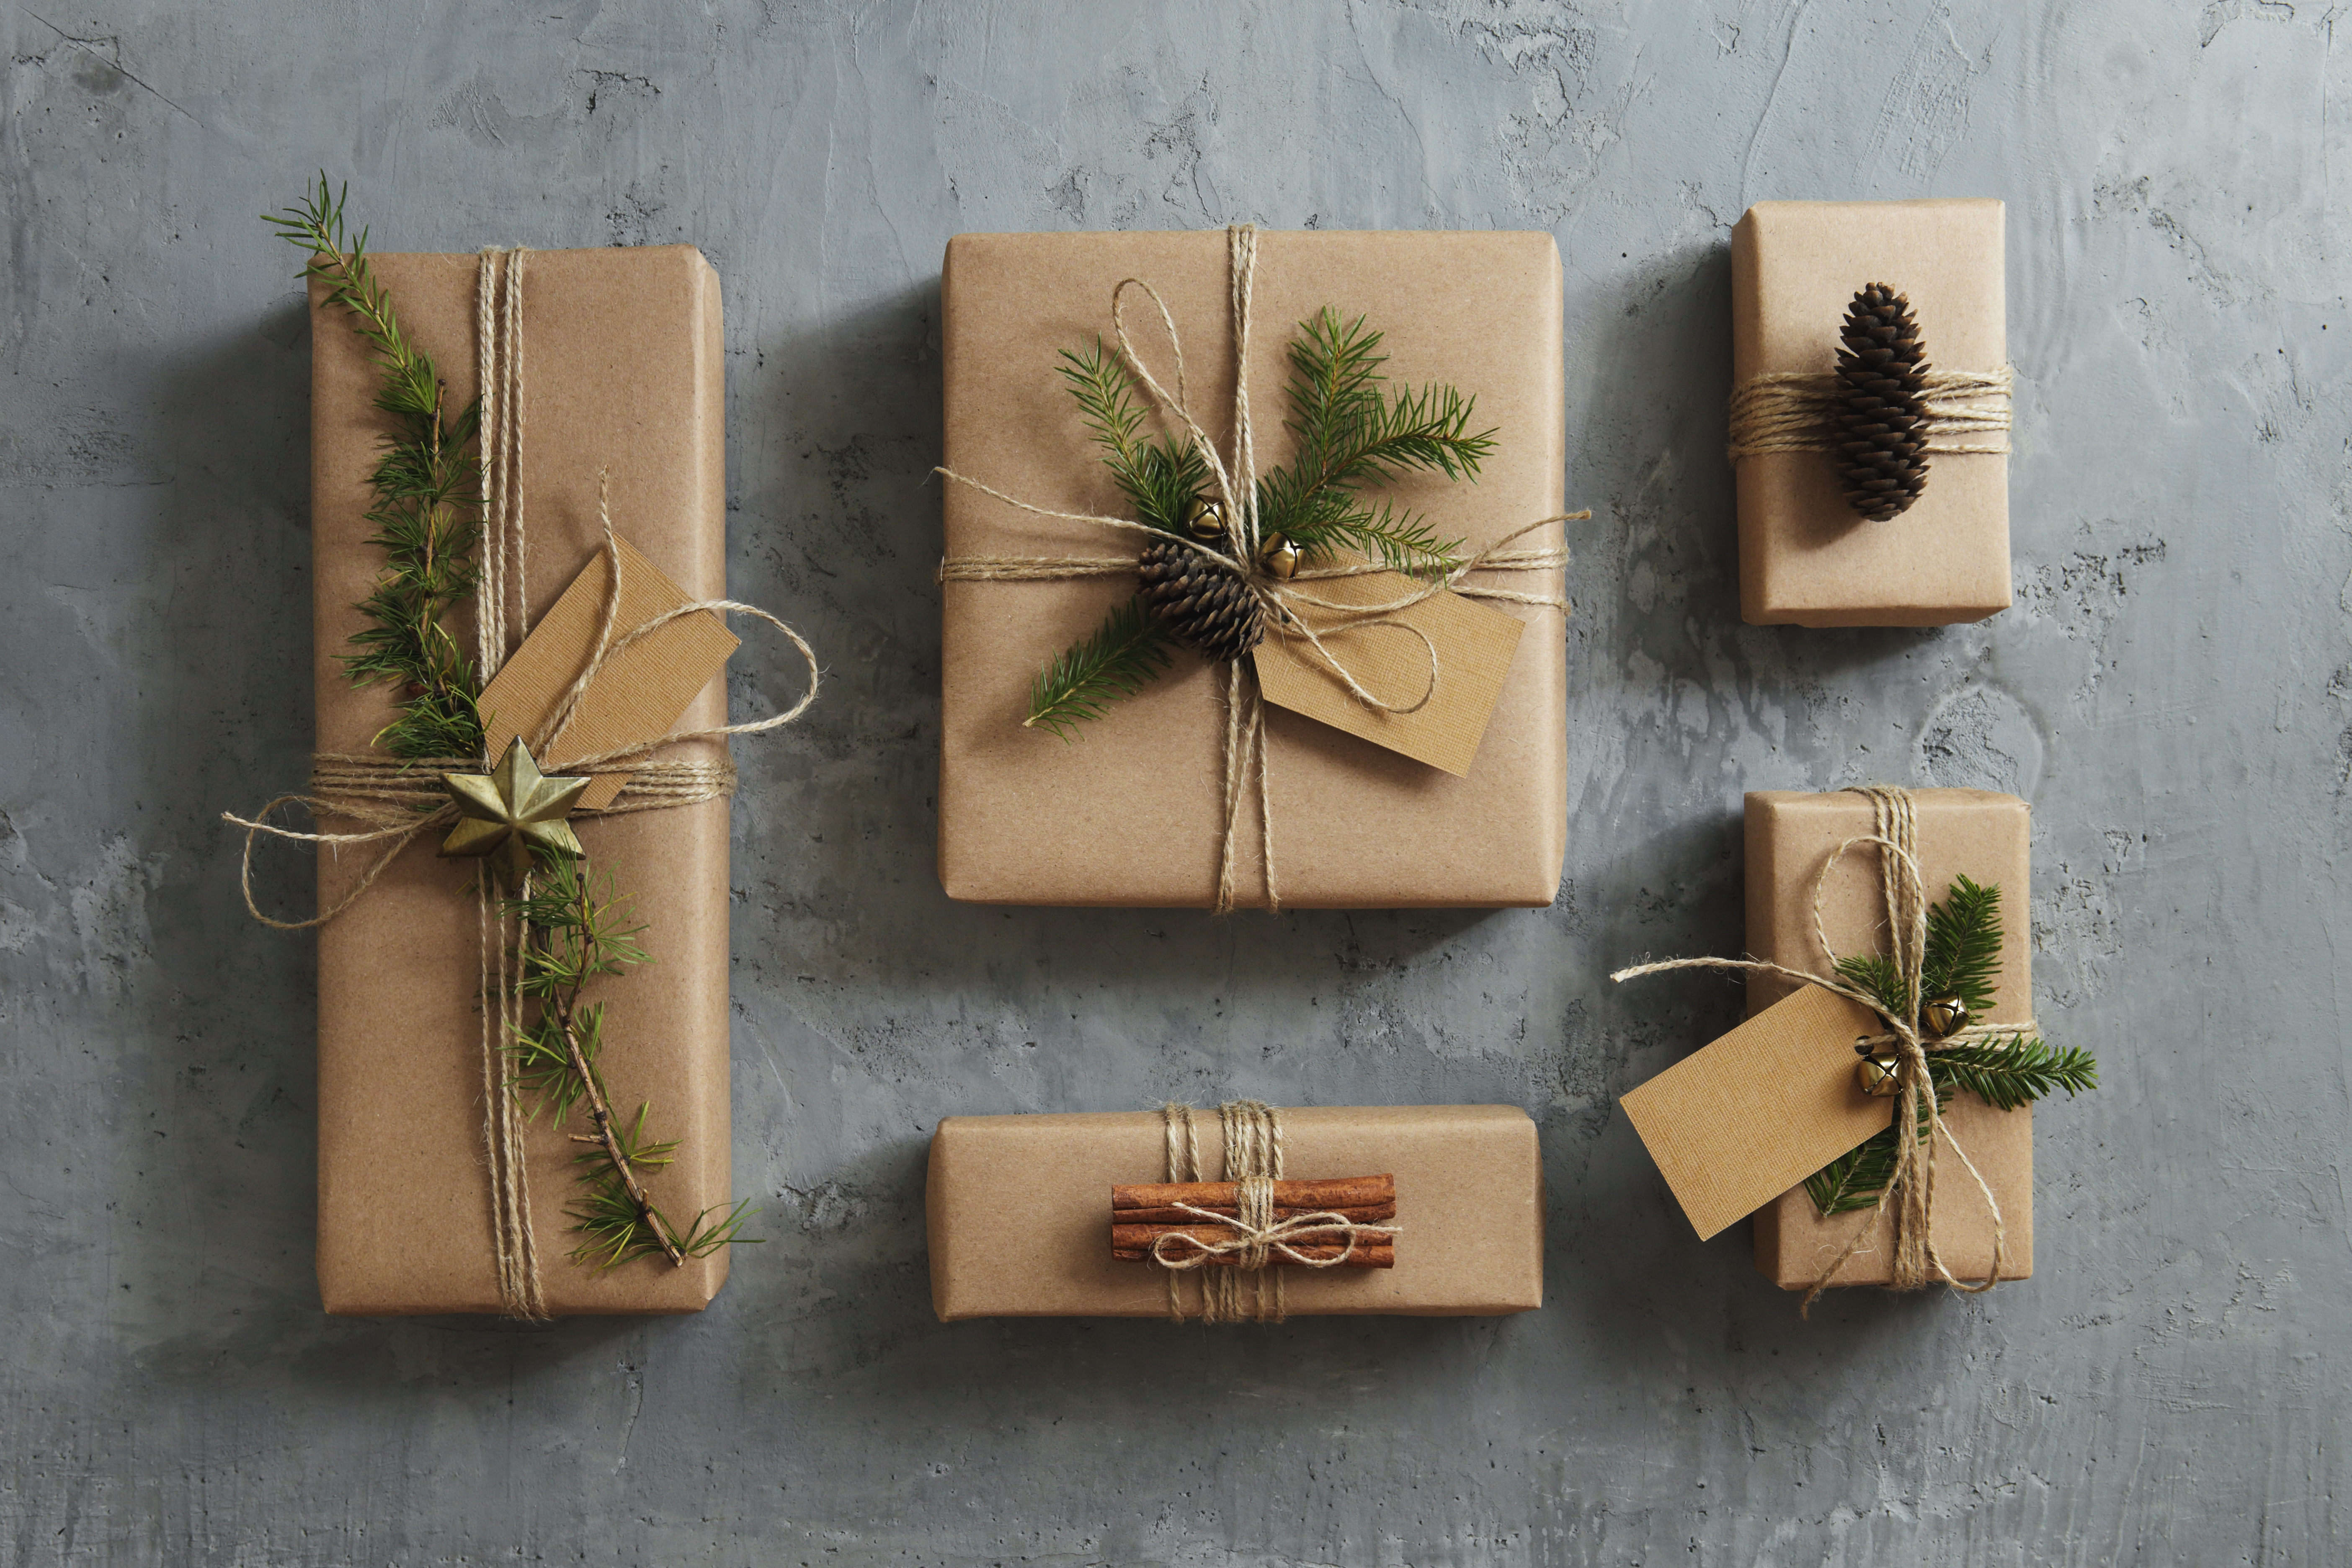 20 Secret Santa gift ideas under $25 - North Shore News